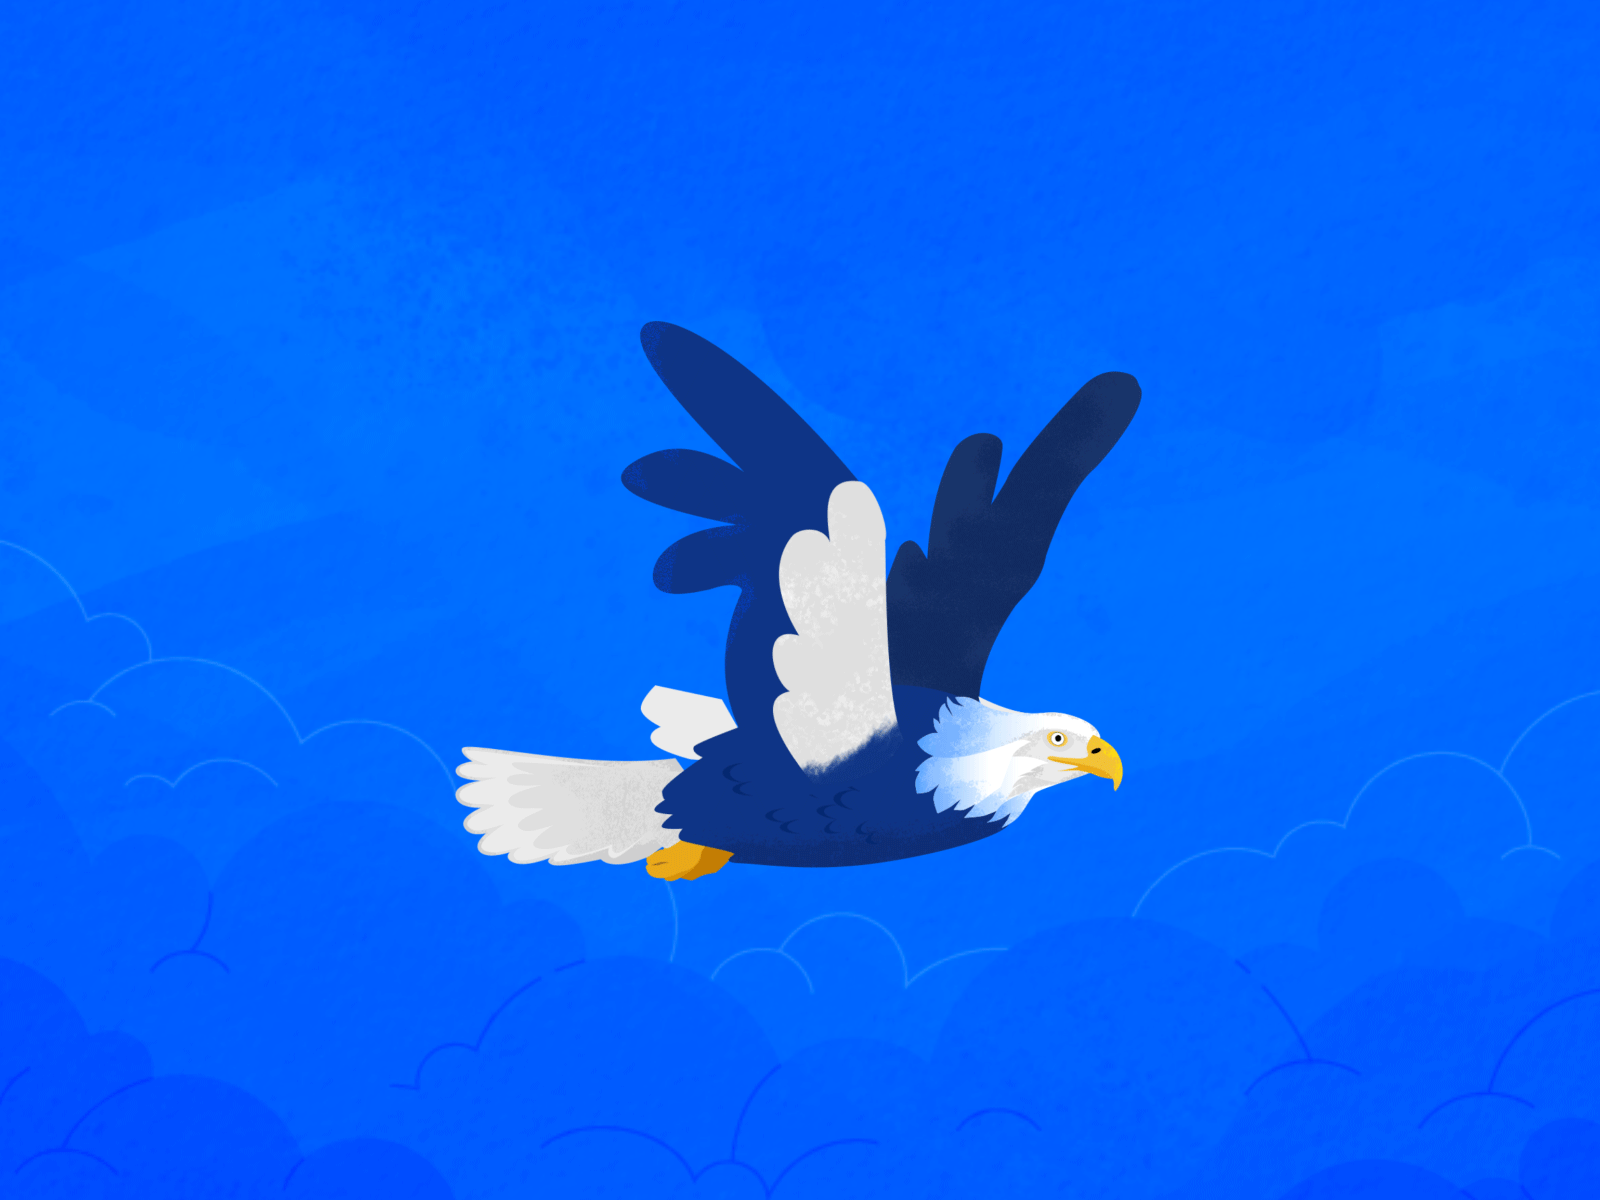 Portela Eagle aftereffects animation bird eagle fly cycle framebyframe ilustration motion design